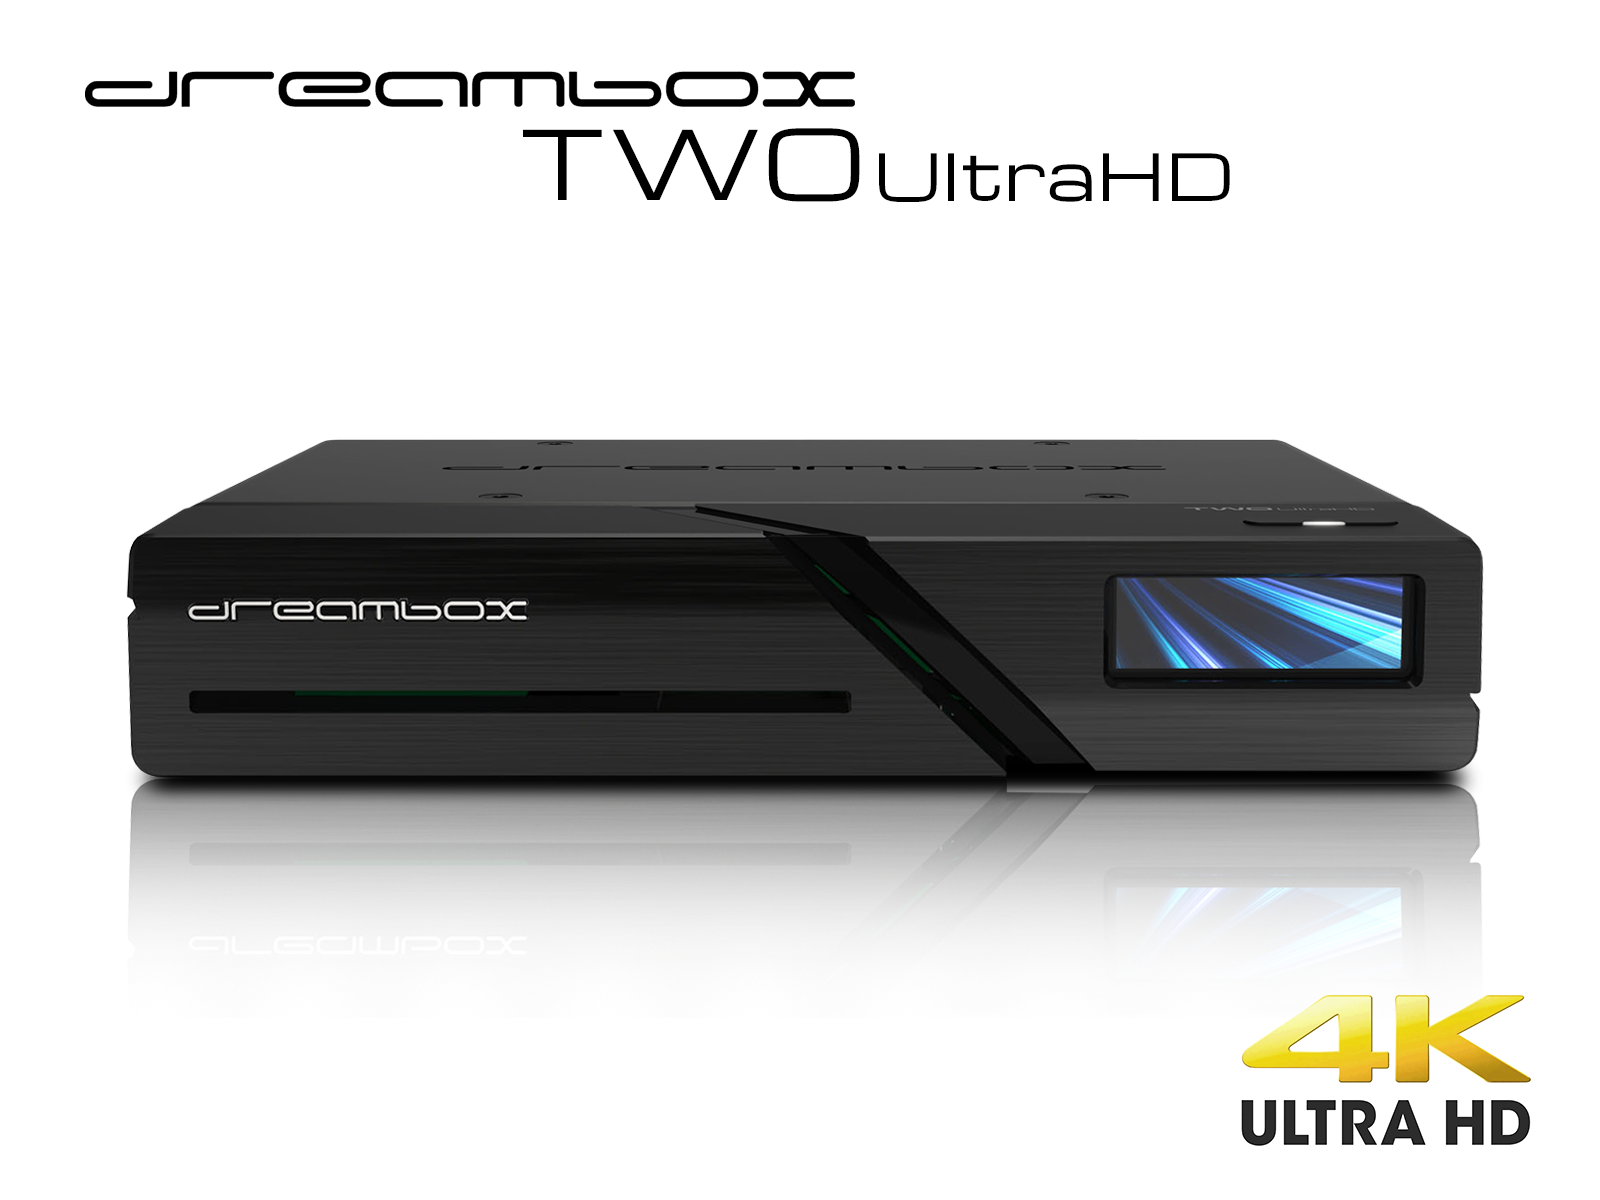  Dreambox Two Ultra HD RC20 2x DVB-S2X MIS Tuner 4K 2160p E2 Linux Dual Wifi H.265 HEVC 